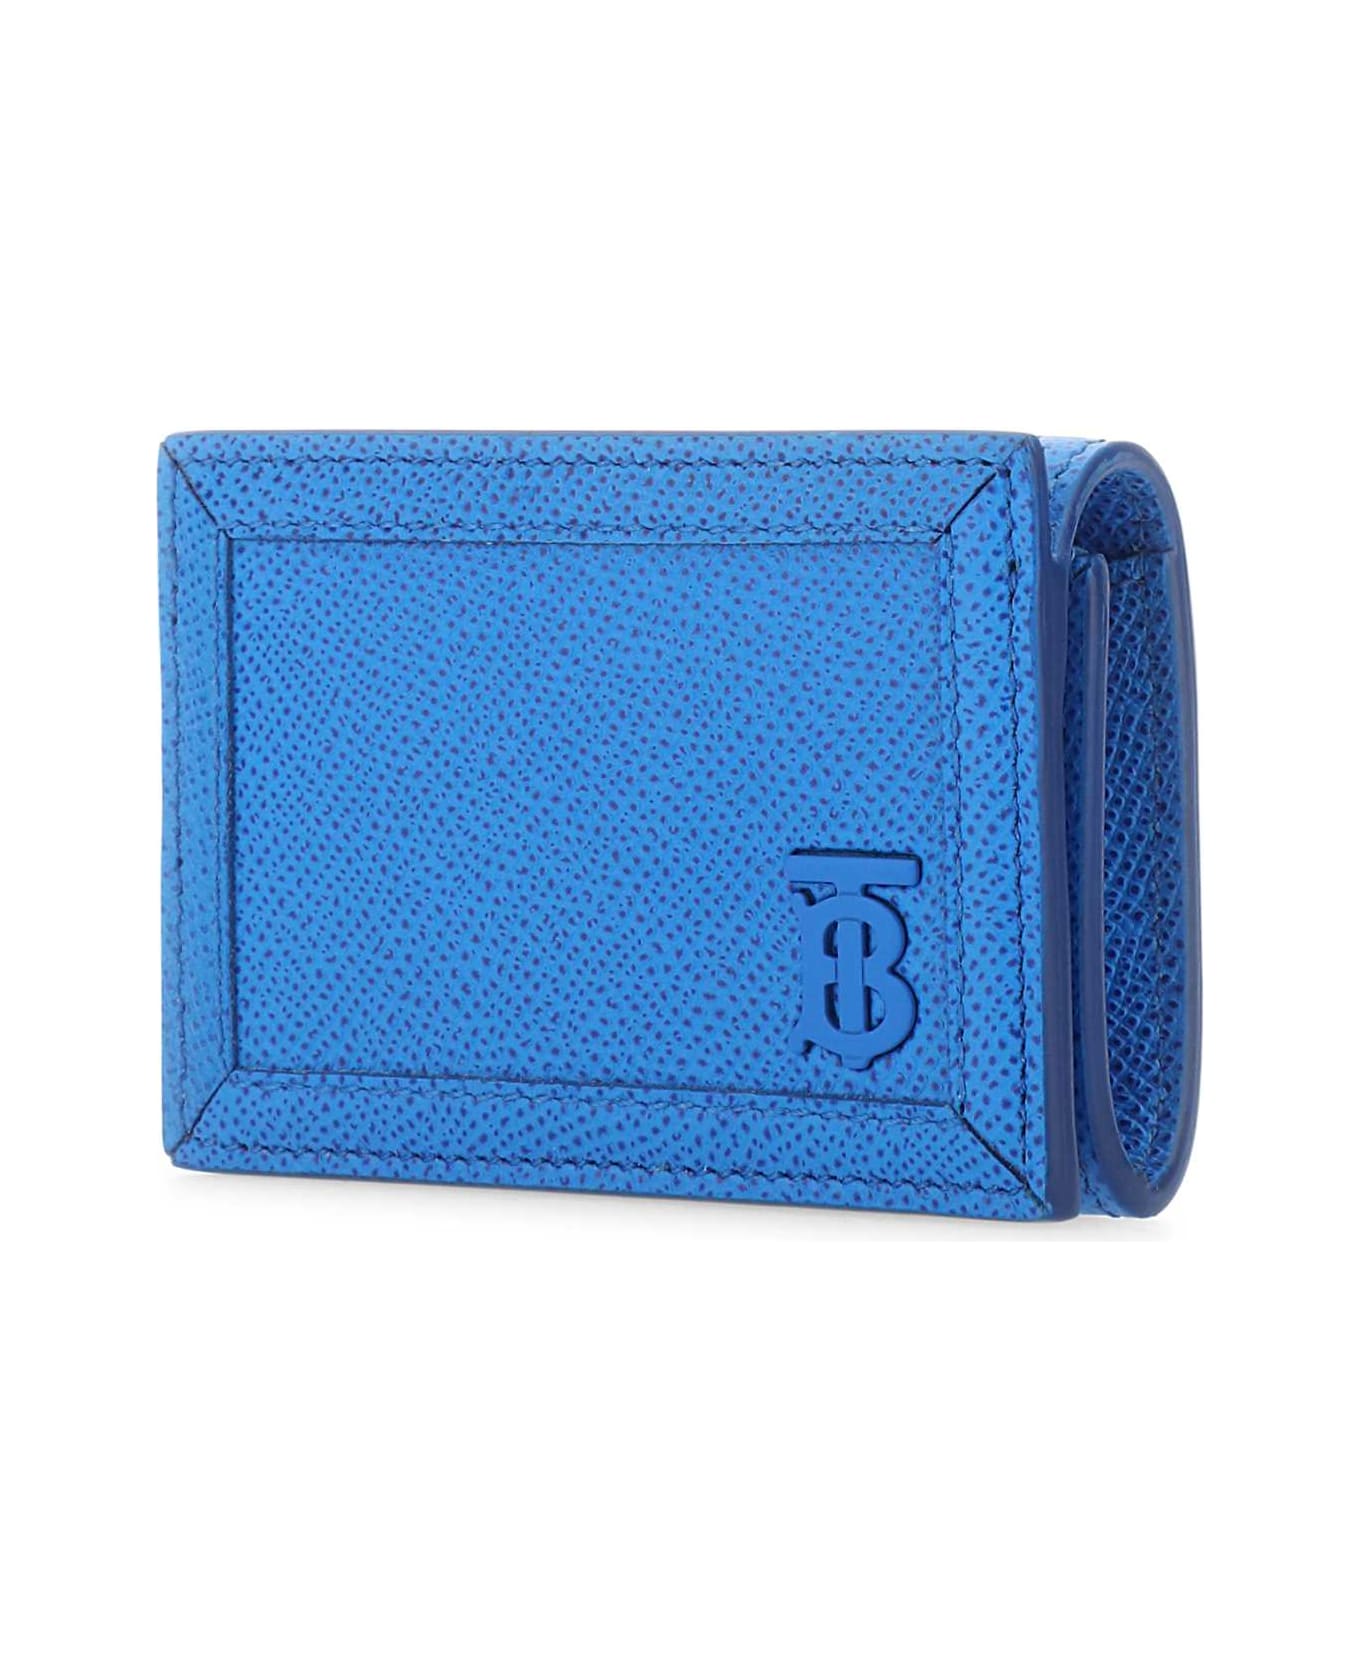 Burberry Turquoise Leather Card Holder - VIVIDBLUE